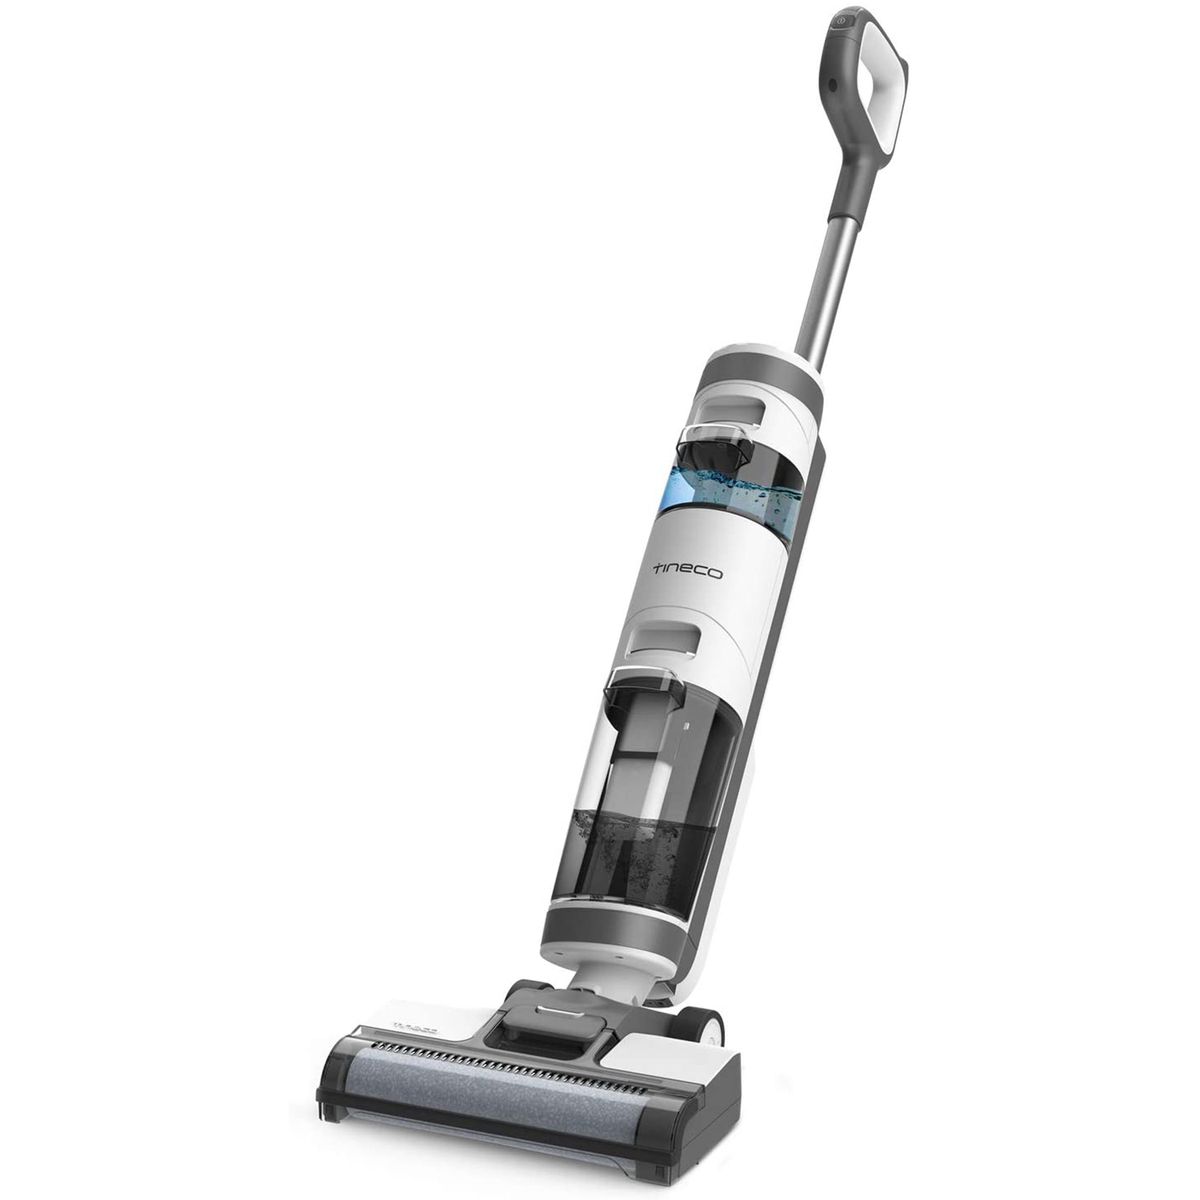 Tineco iFloor 3 Cordless Hard Floor Wet Dry Vacuum